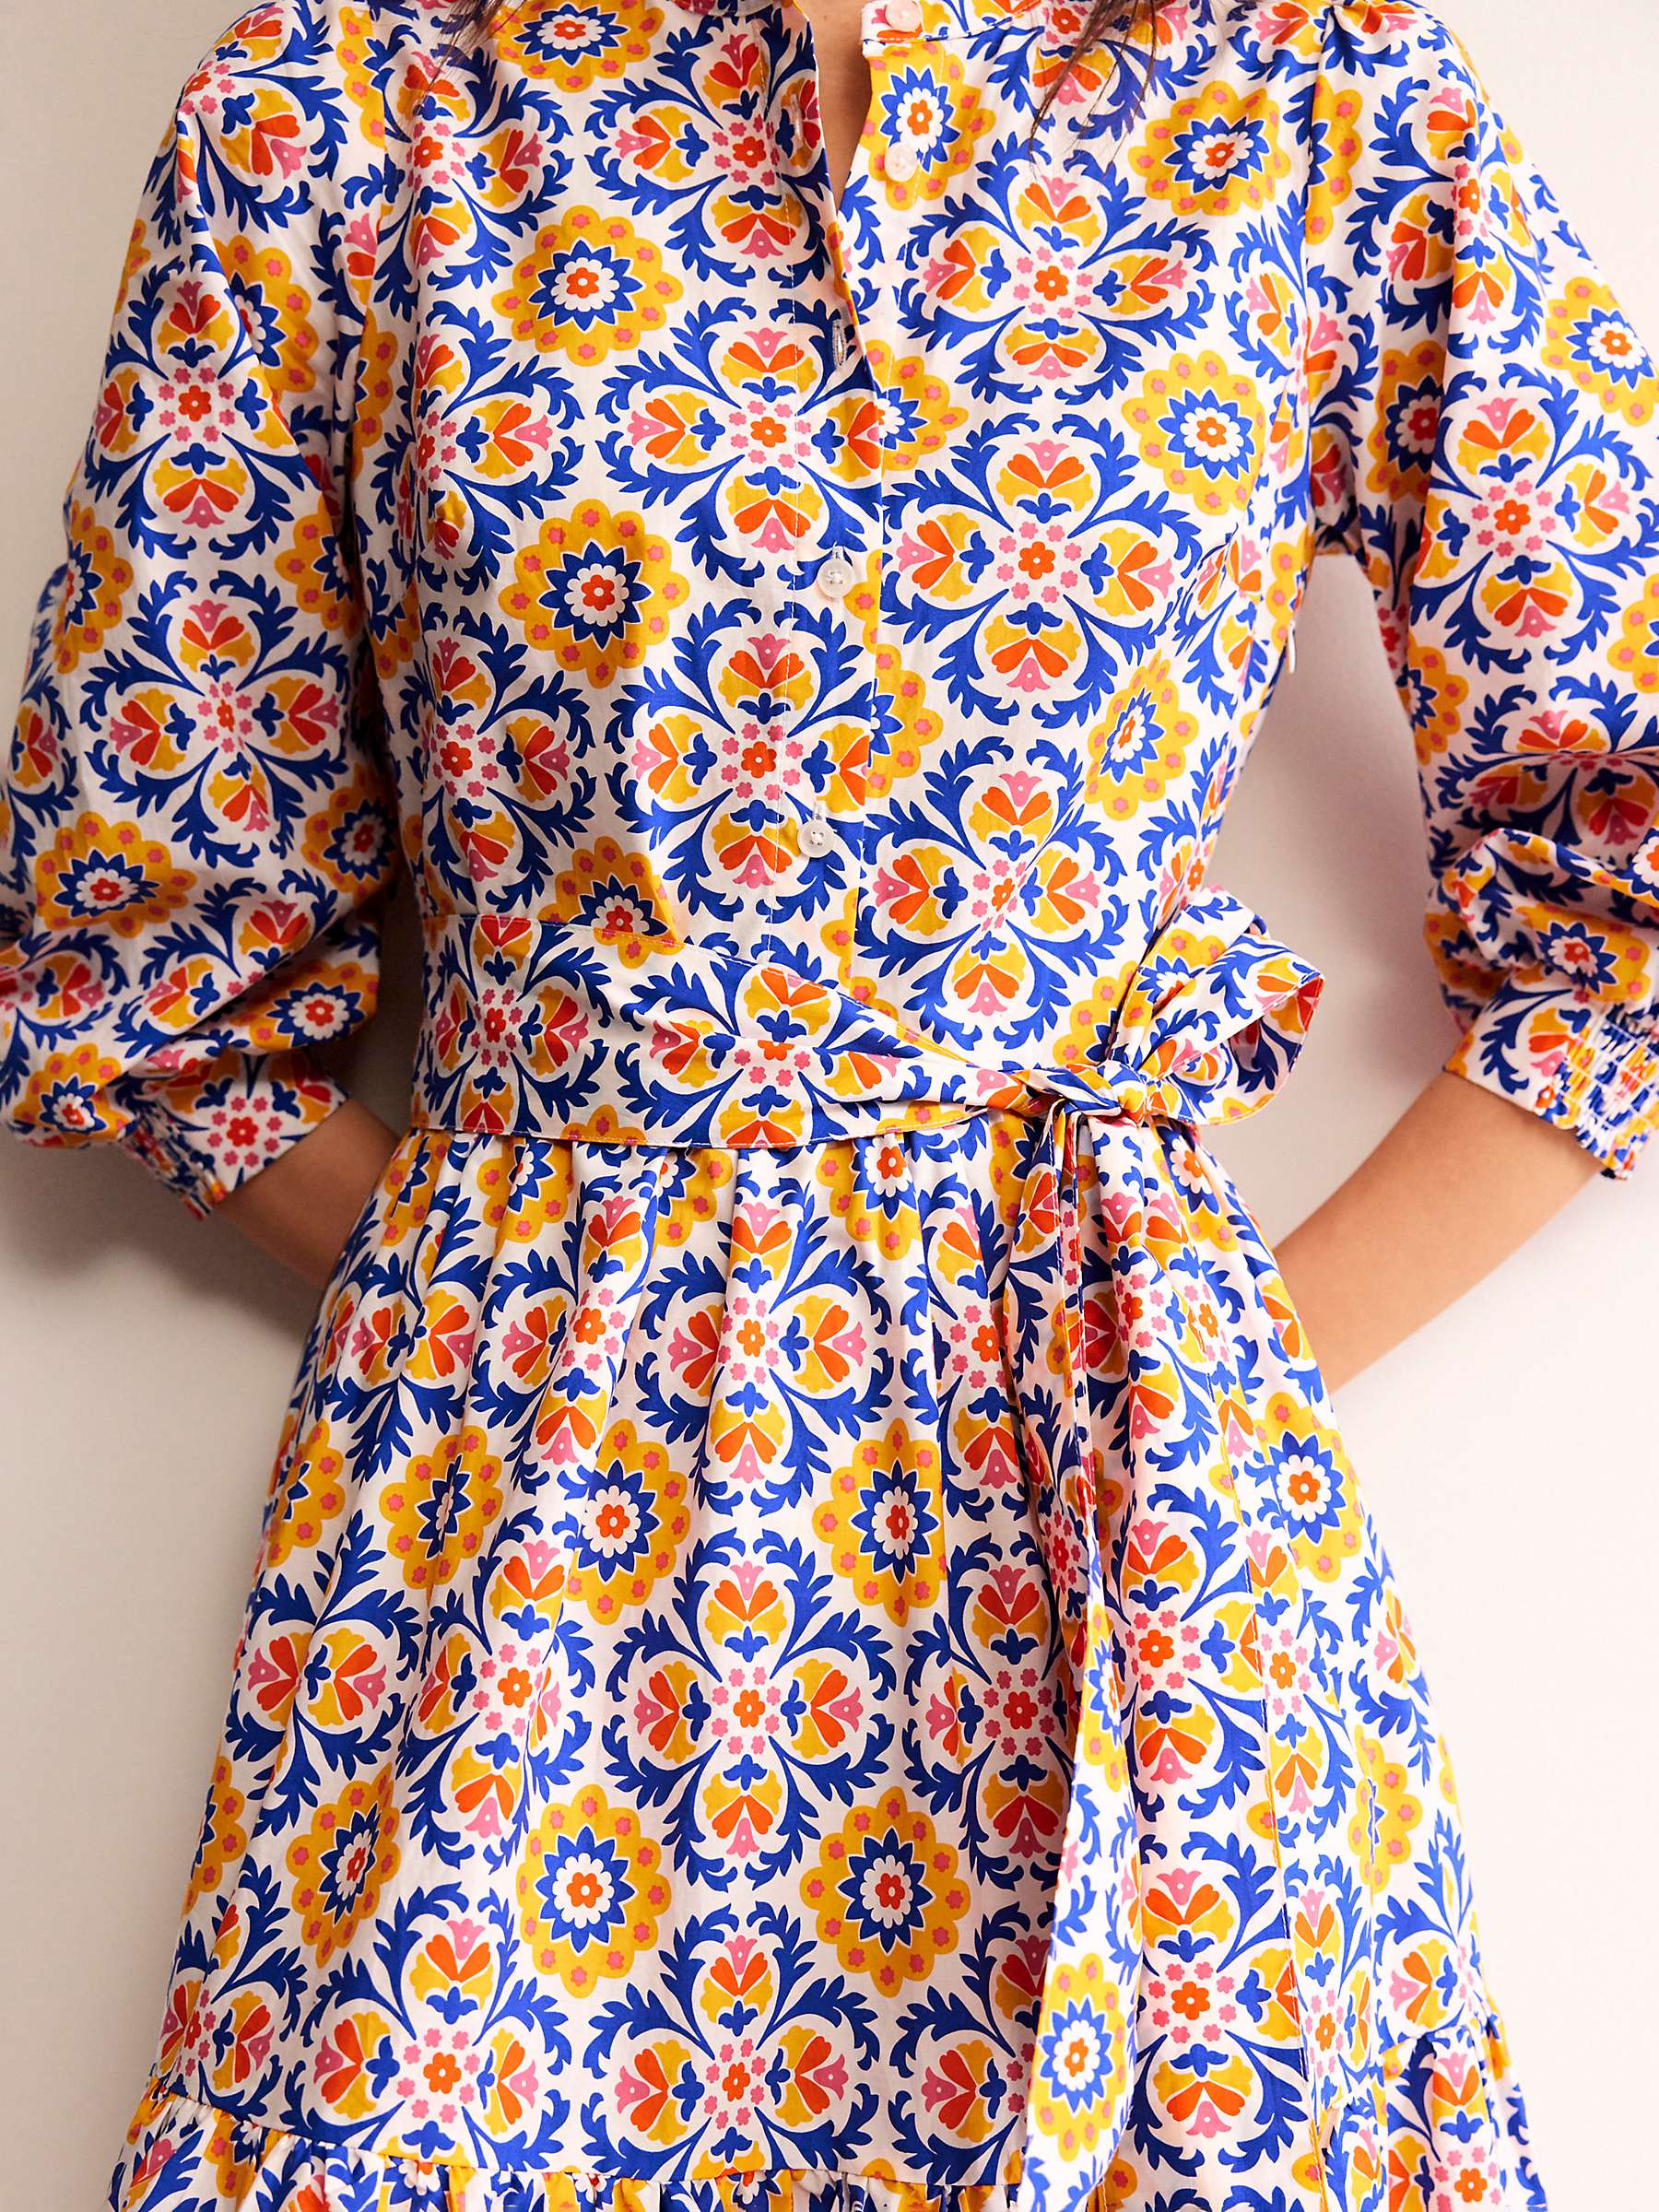 Buy Boden Alba Mosaic Bloom Print Tiered Cotton Dress, Gold/Multi Online at johnlewis.com